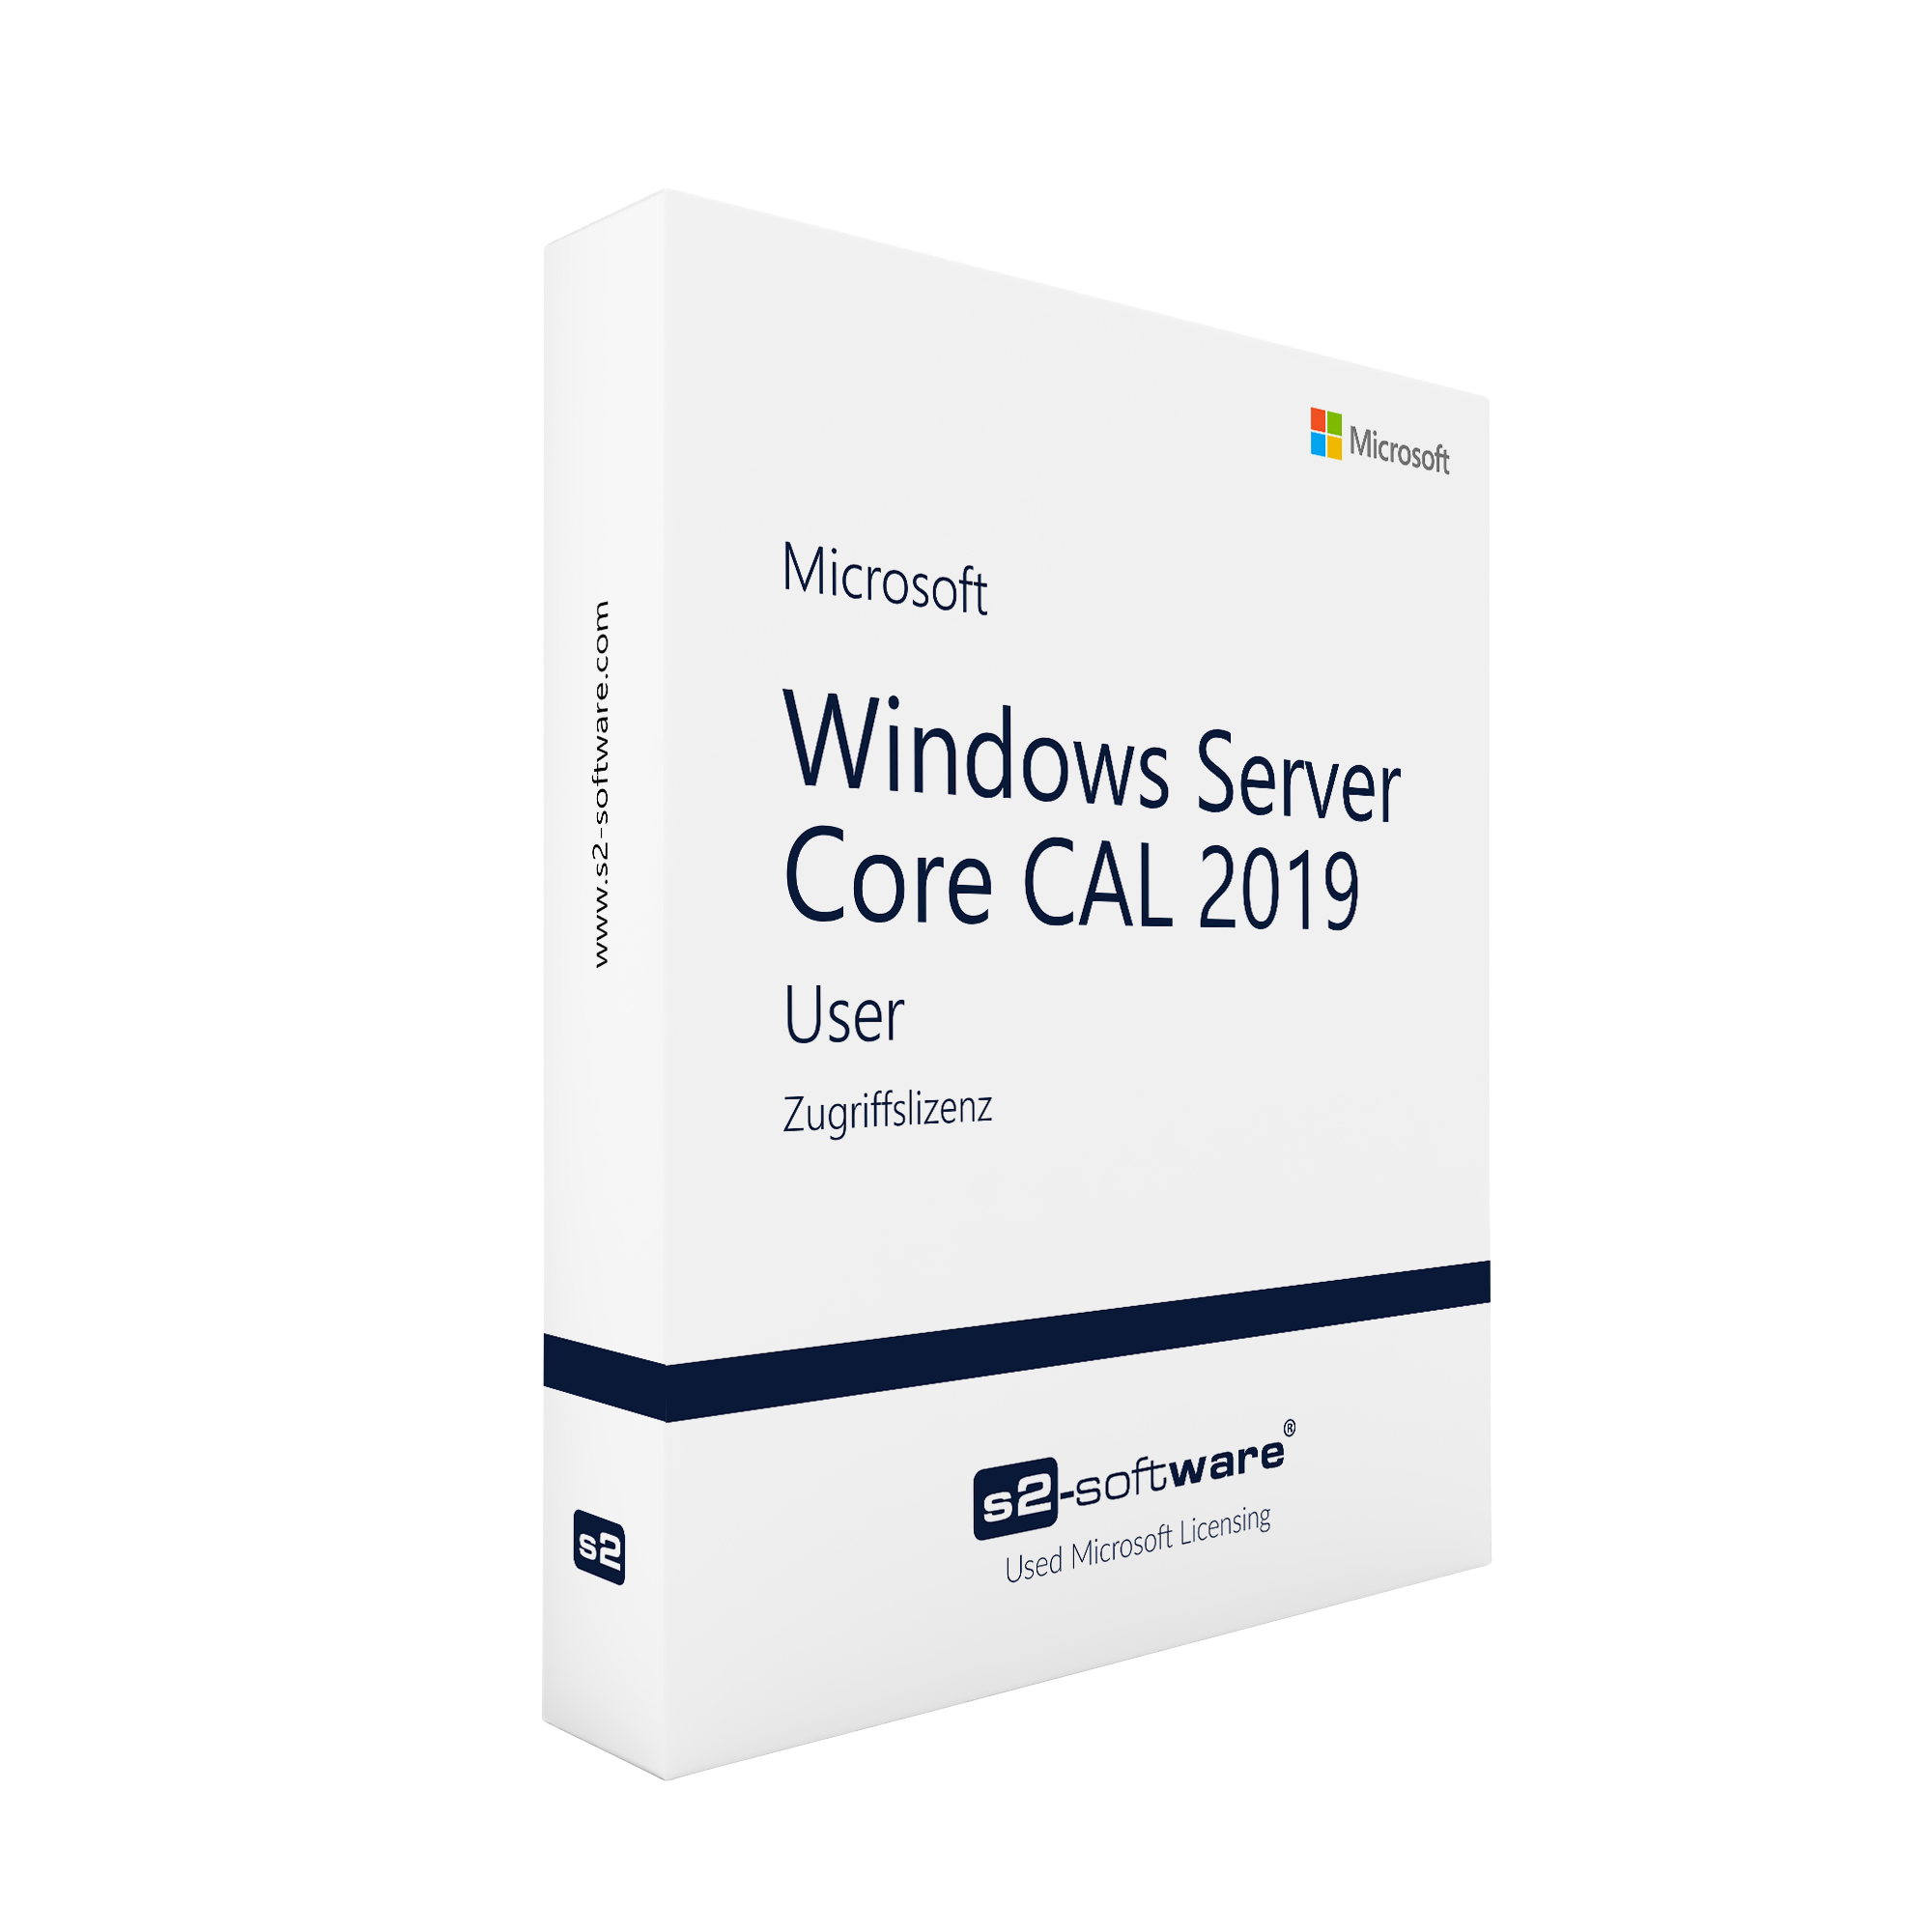 Windows Server Core CAL 2019 User